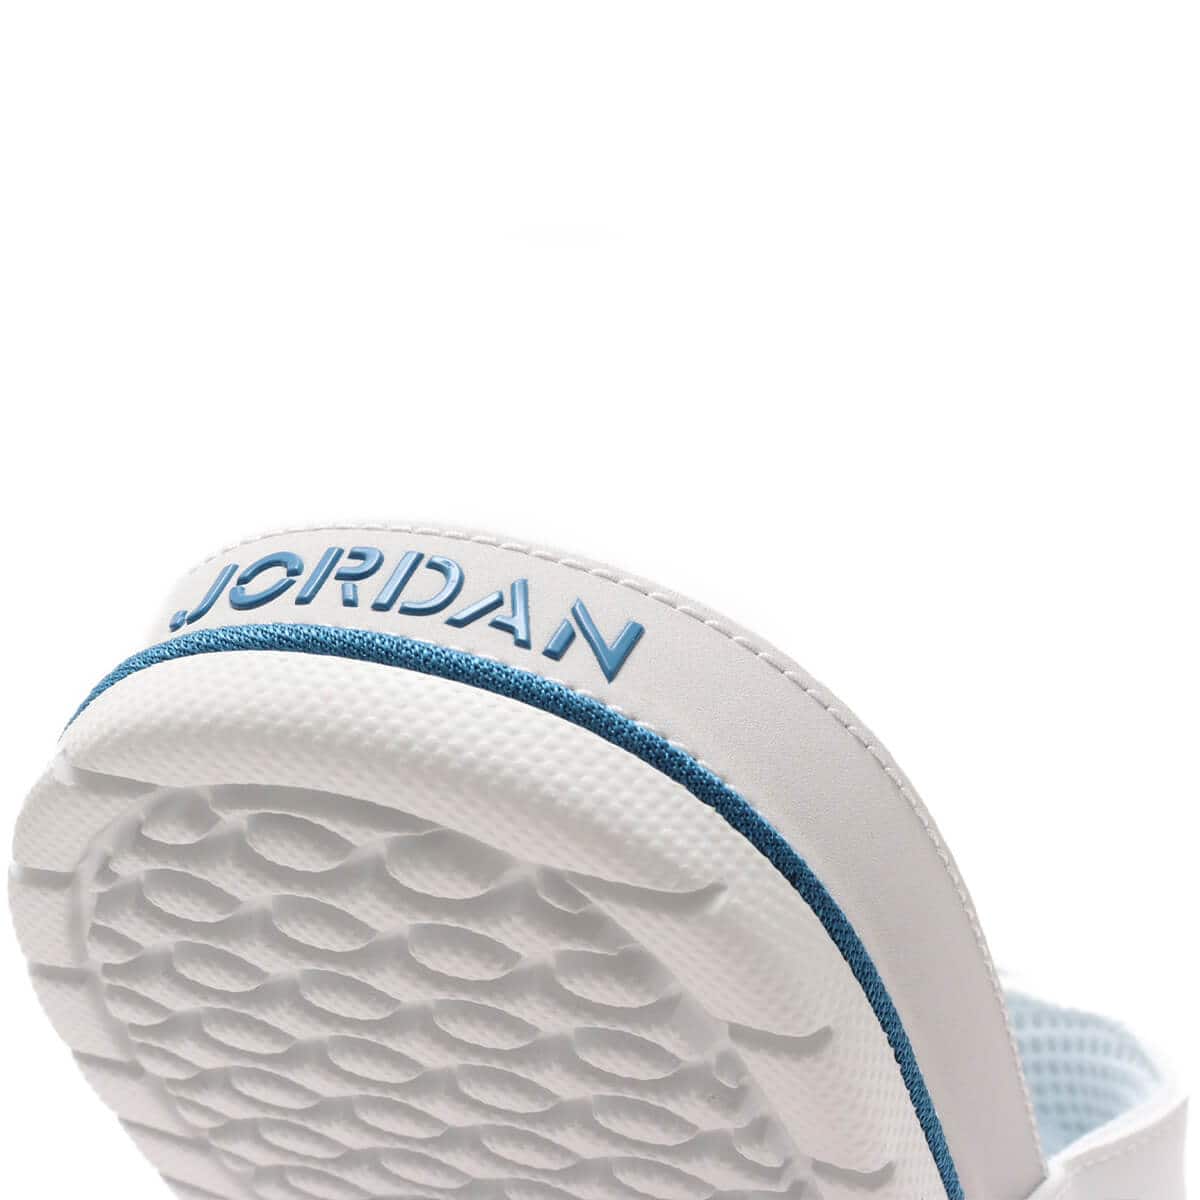 JORDAN BRAND JORDAN HYDRO IV RETRO OFF WHITE/INDUSTRIAL BLUE 